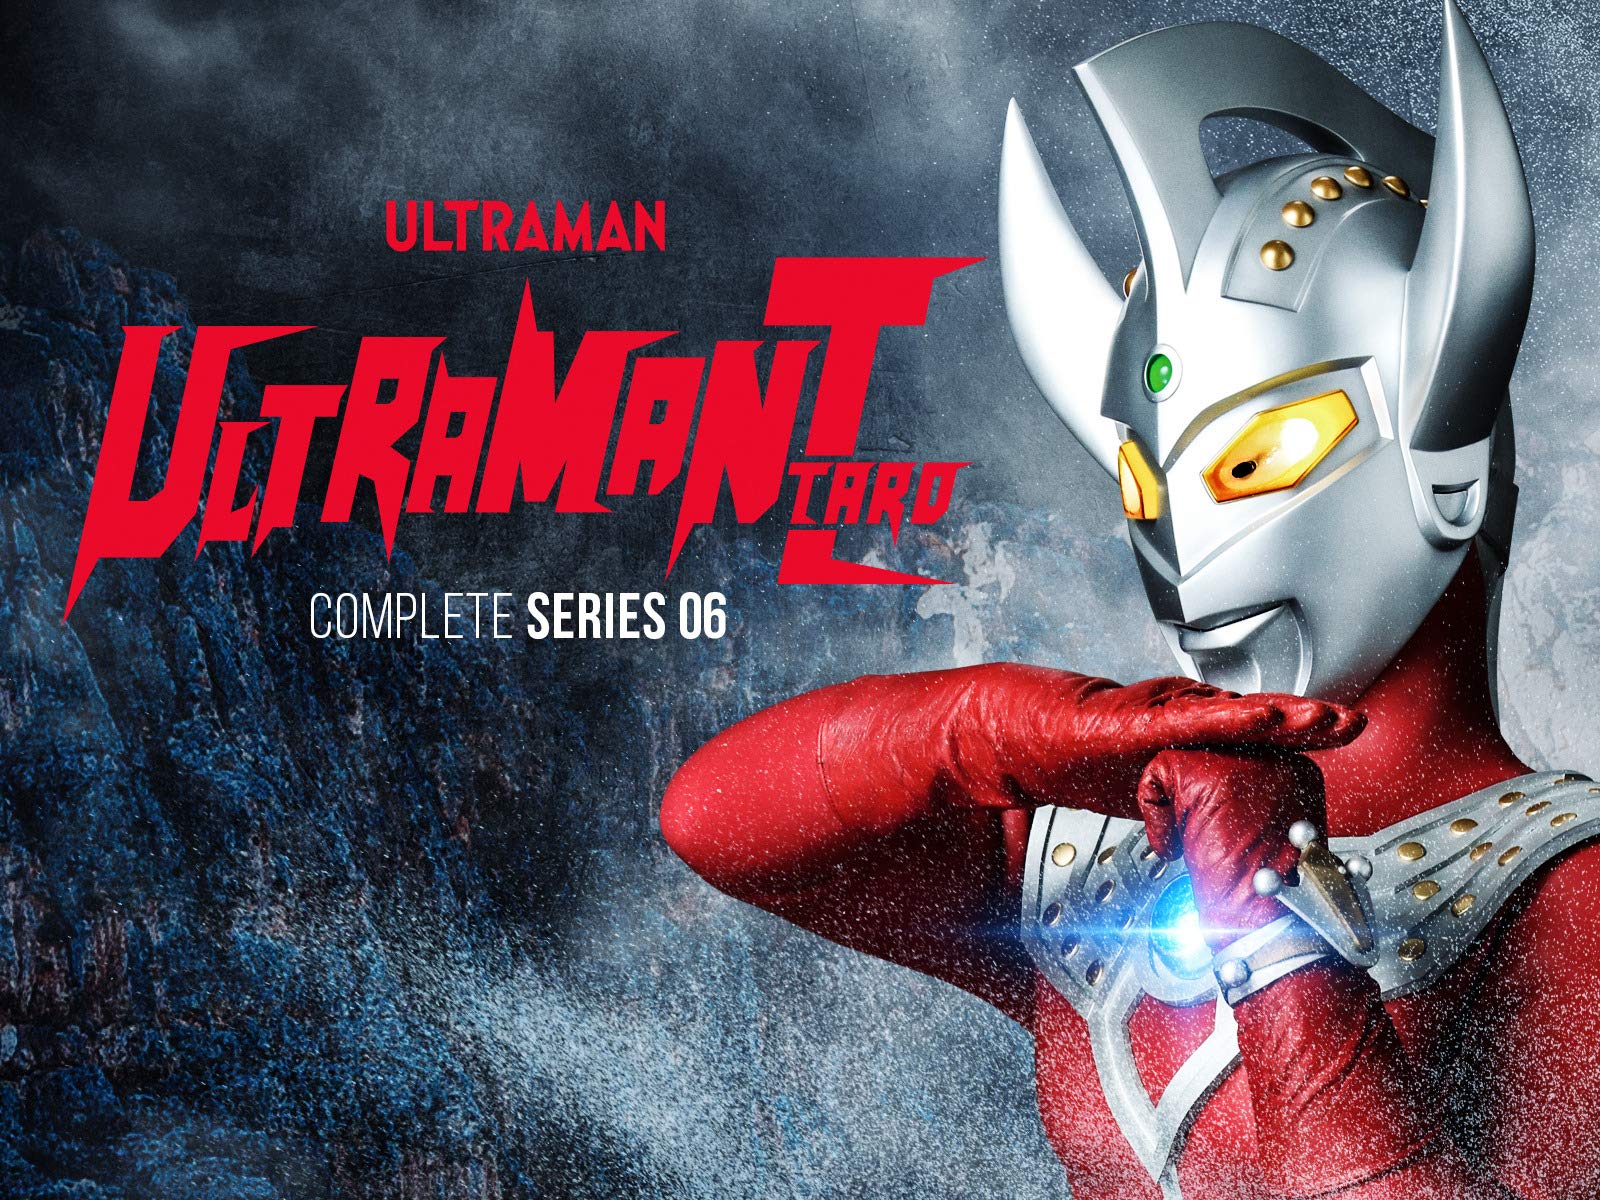 Watch Ultraman Taro